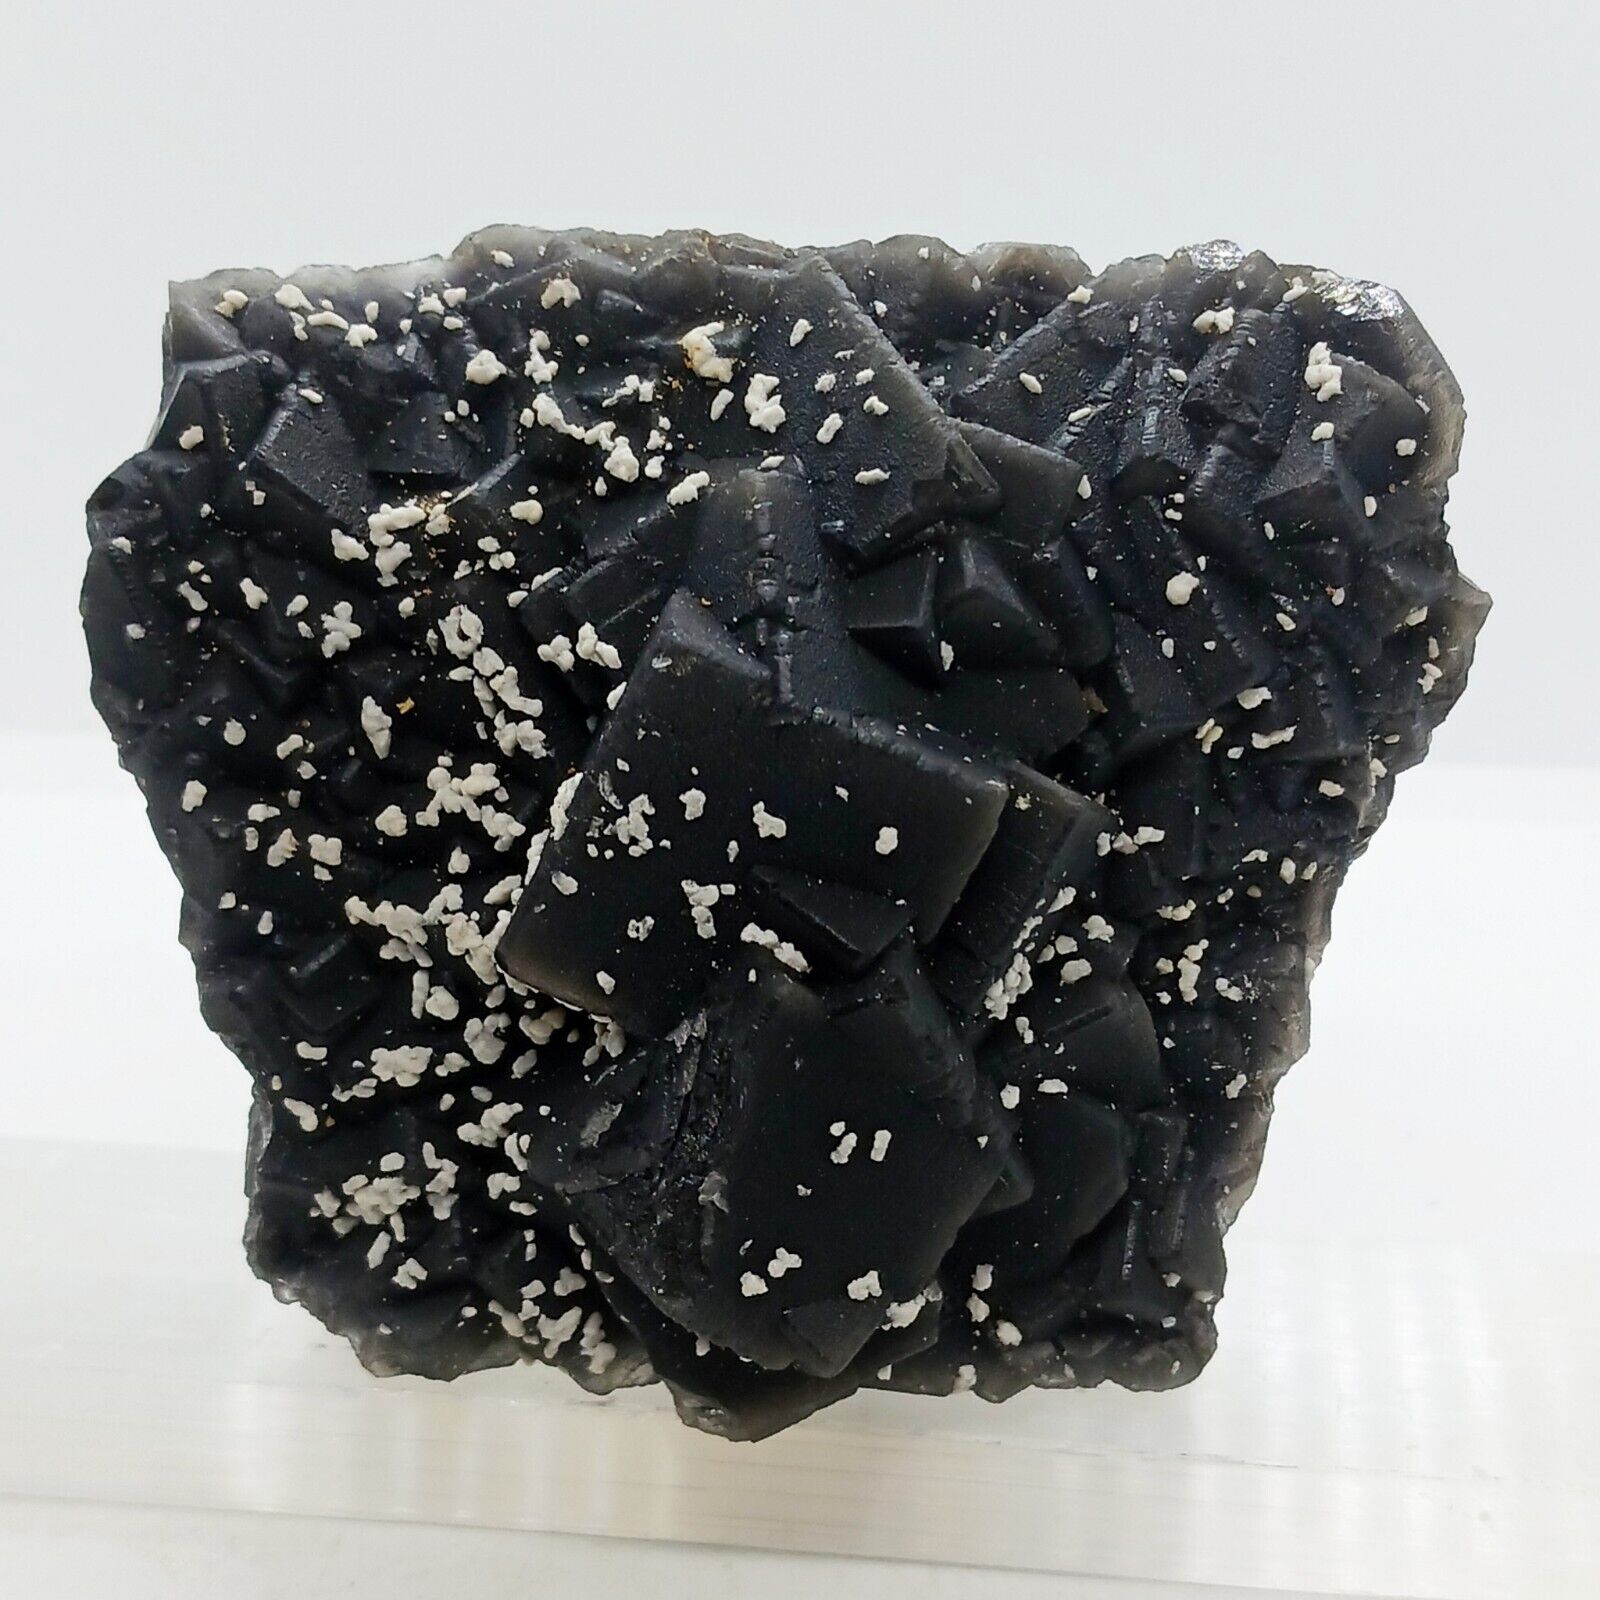 Rare Black Fluorite & cerussite large natural cubic Raw black fluorite Crystal